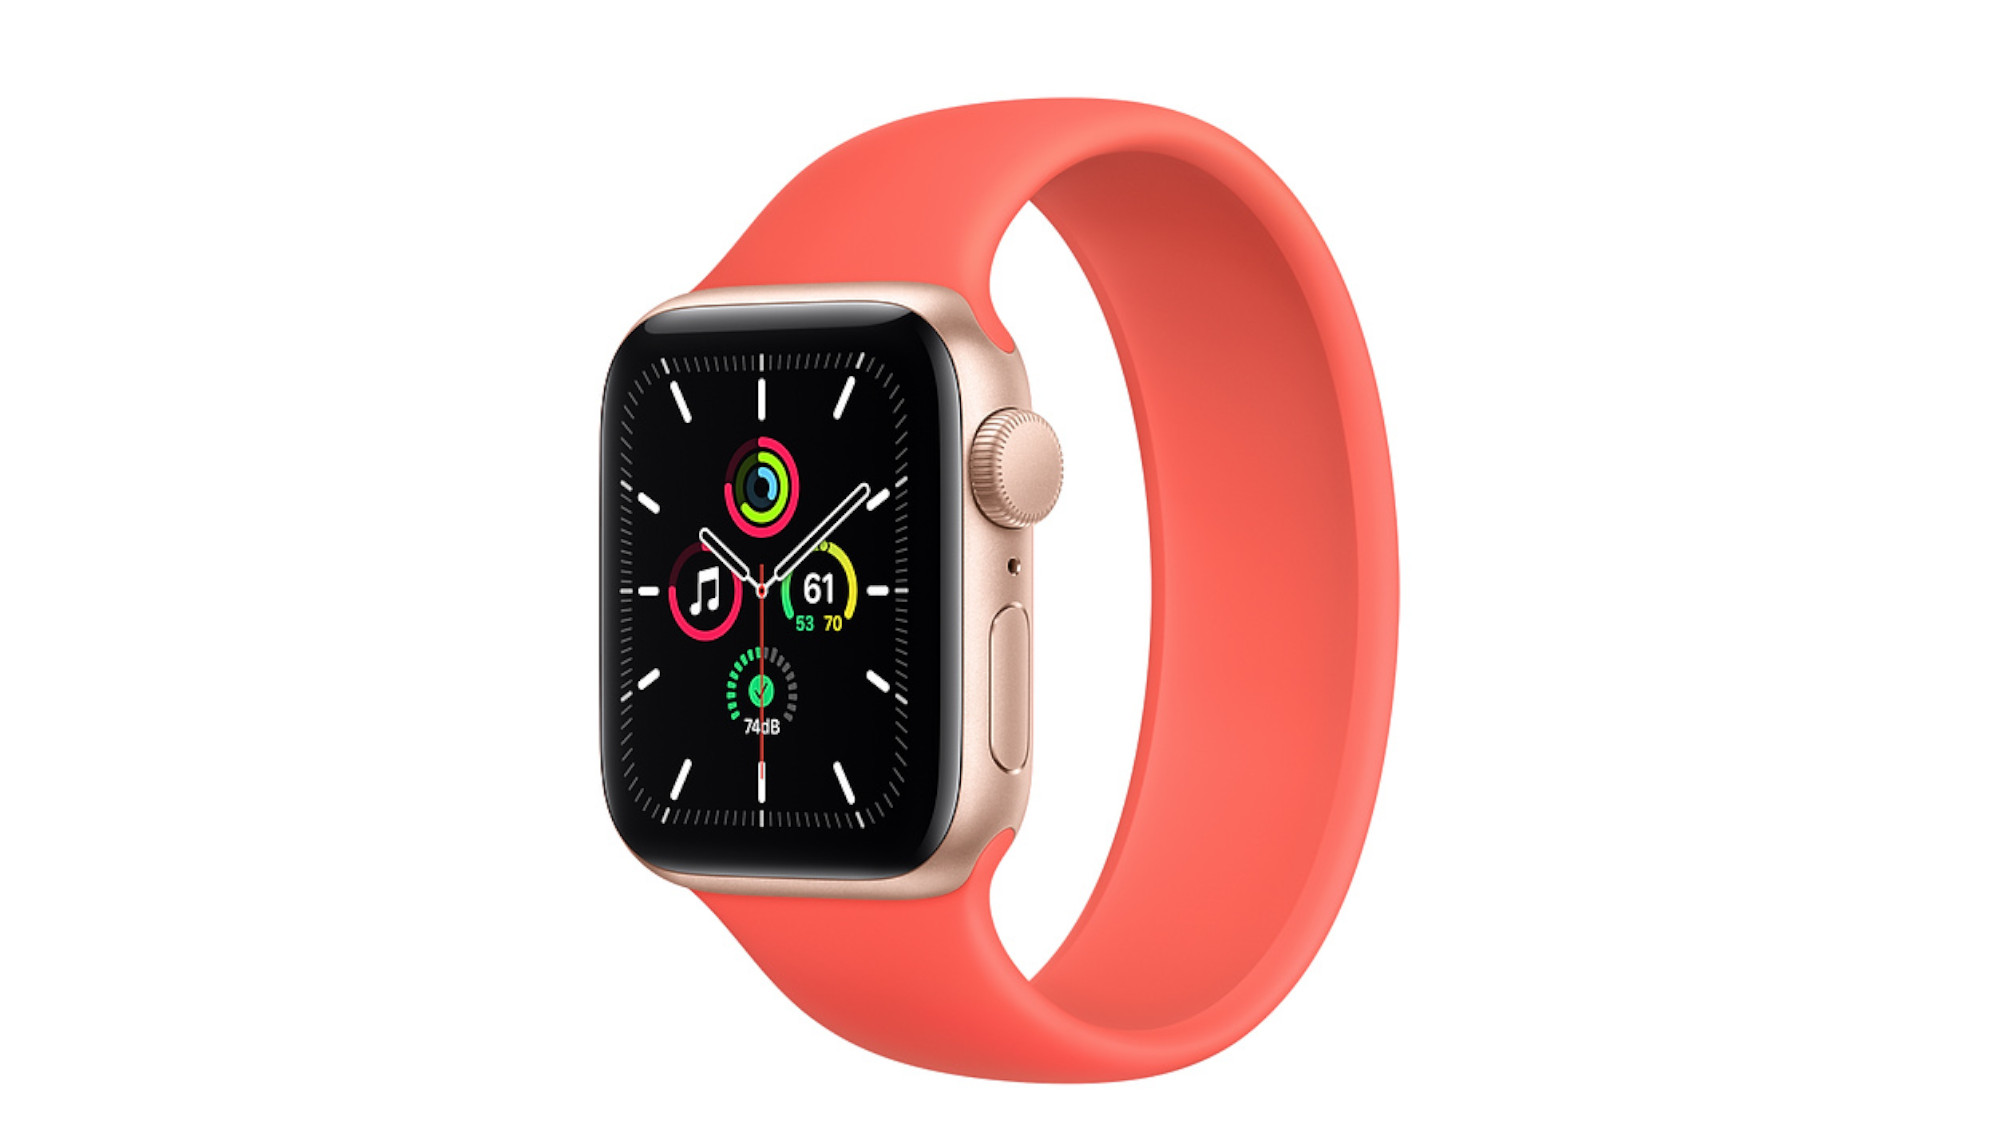 apple watch deals sales price: SE